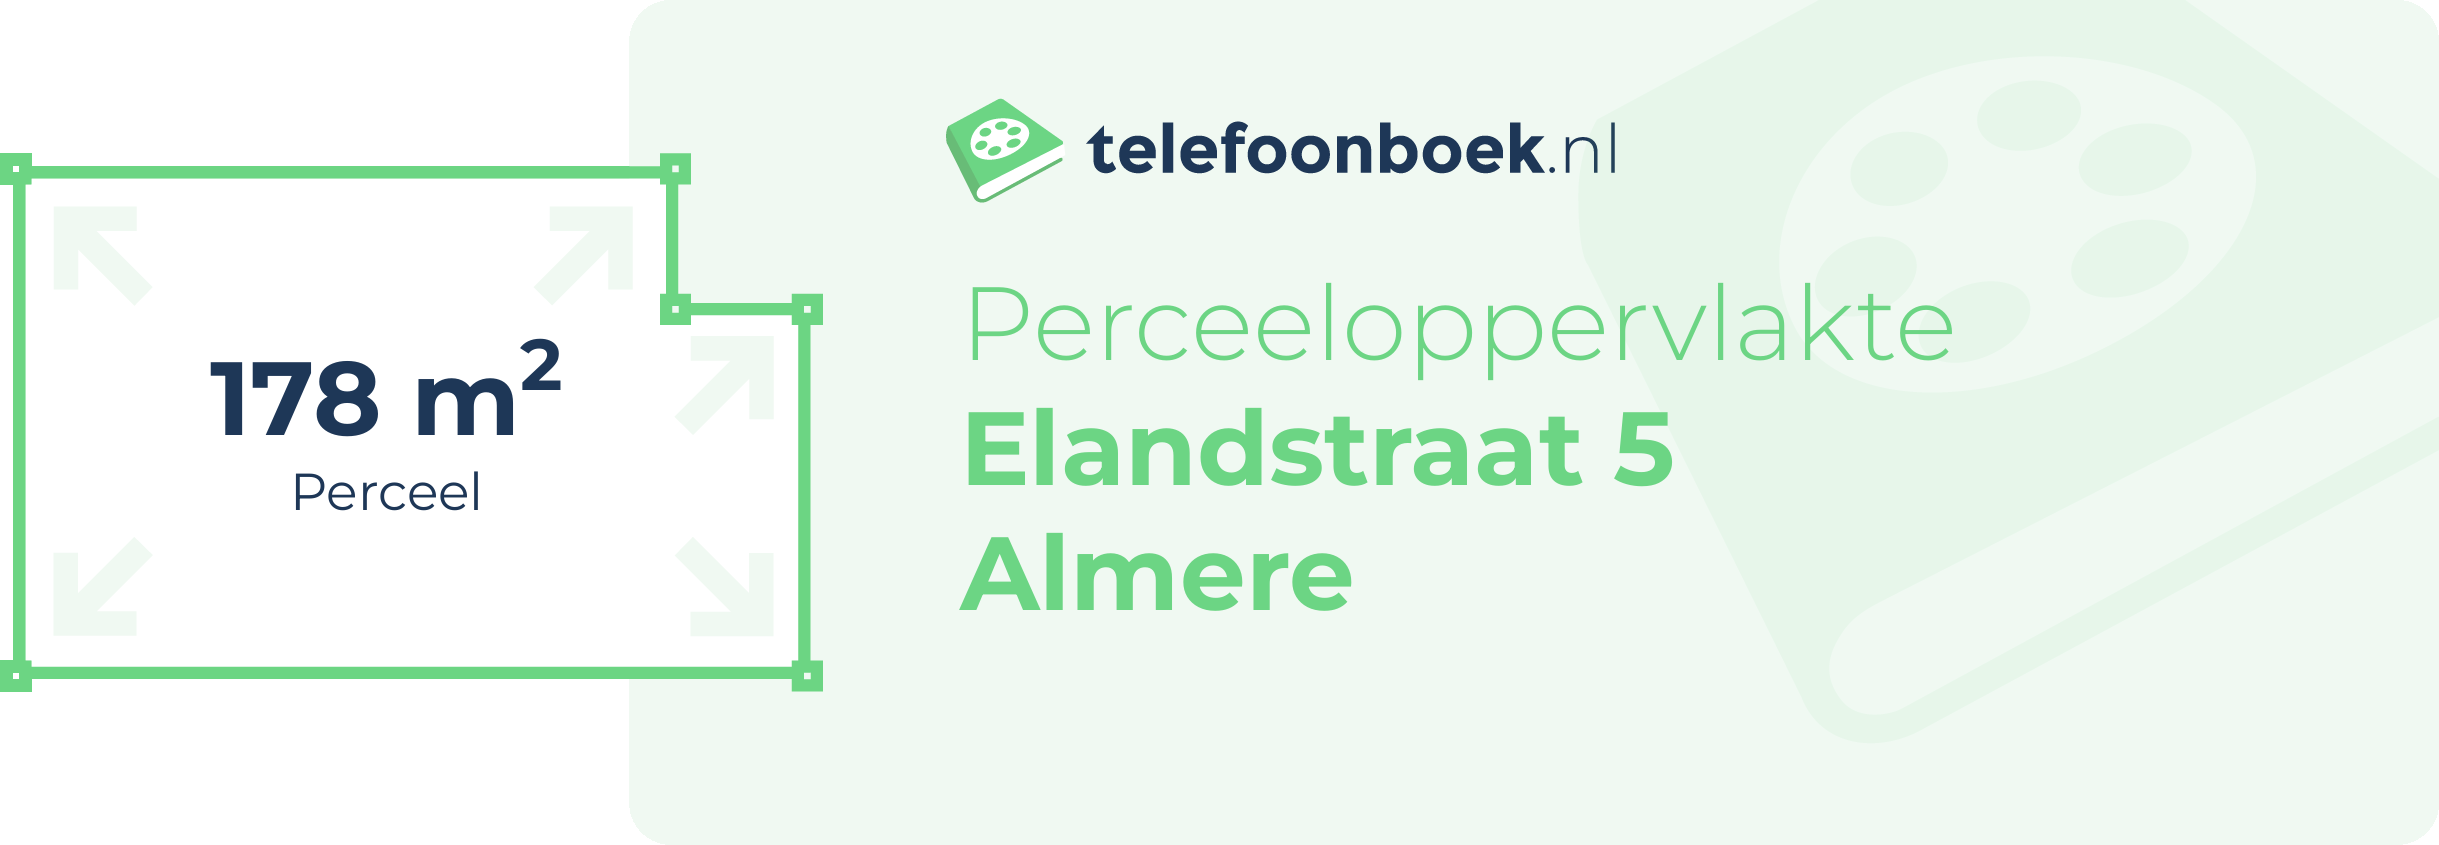 Perceeloppervlakte Elandstraat 5 Almere